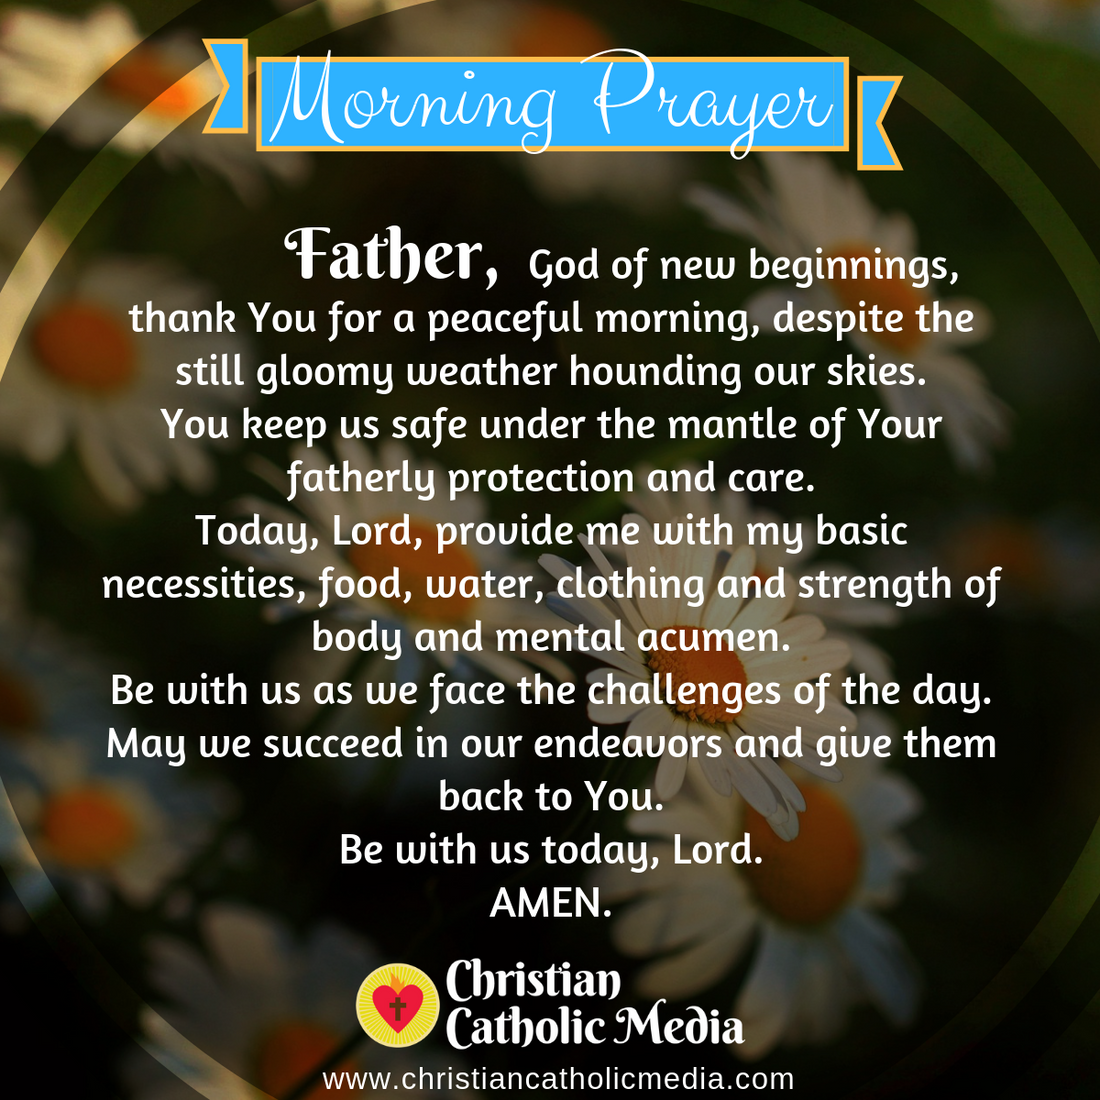 Morning Prayer Catholic Monday 6-1-2020